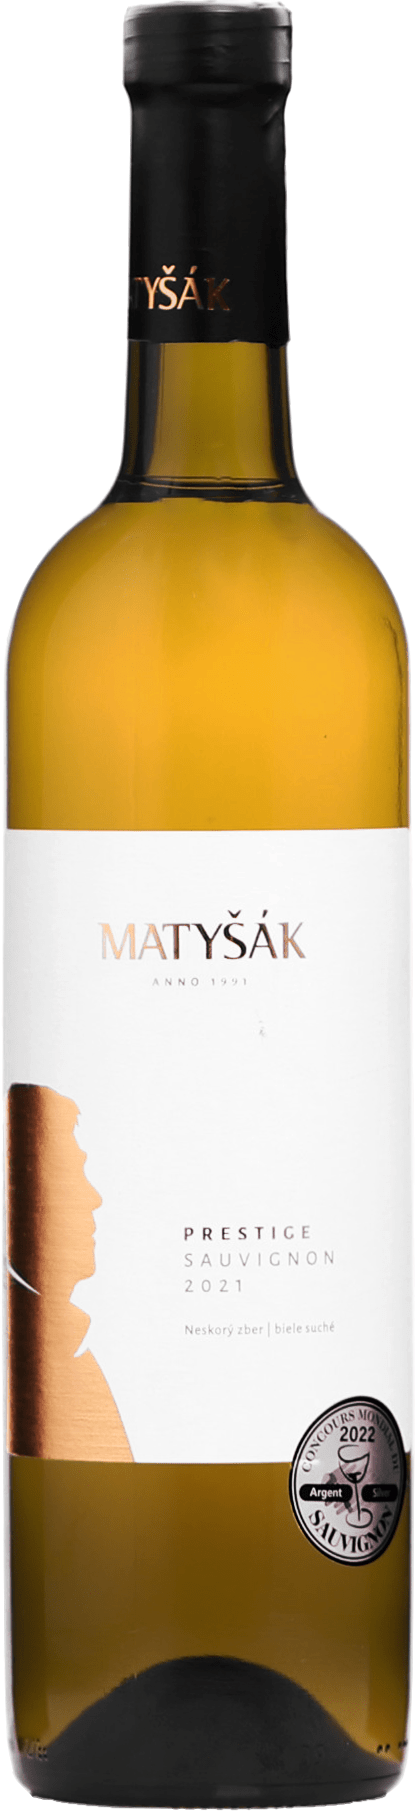 Matyšák Prestige Sauvignon 12,5% 0,75l (čistá fľaša)